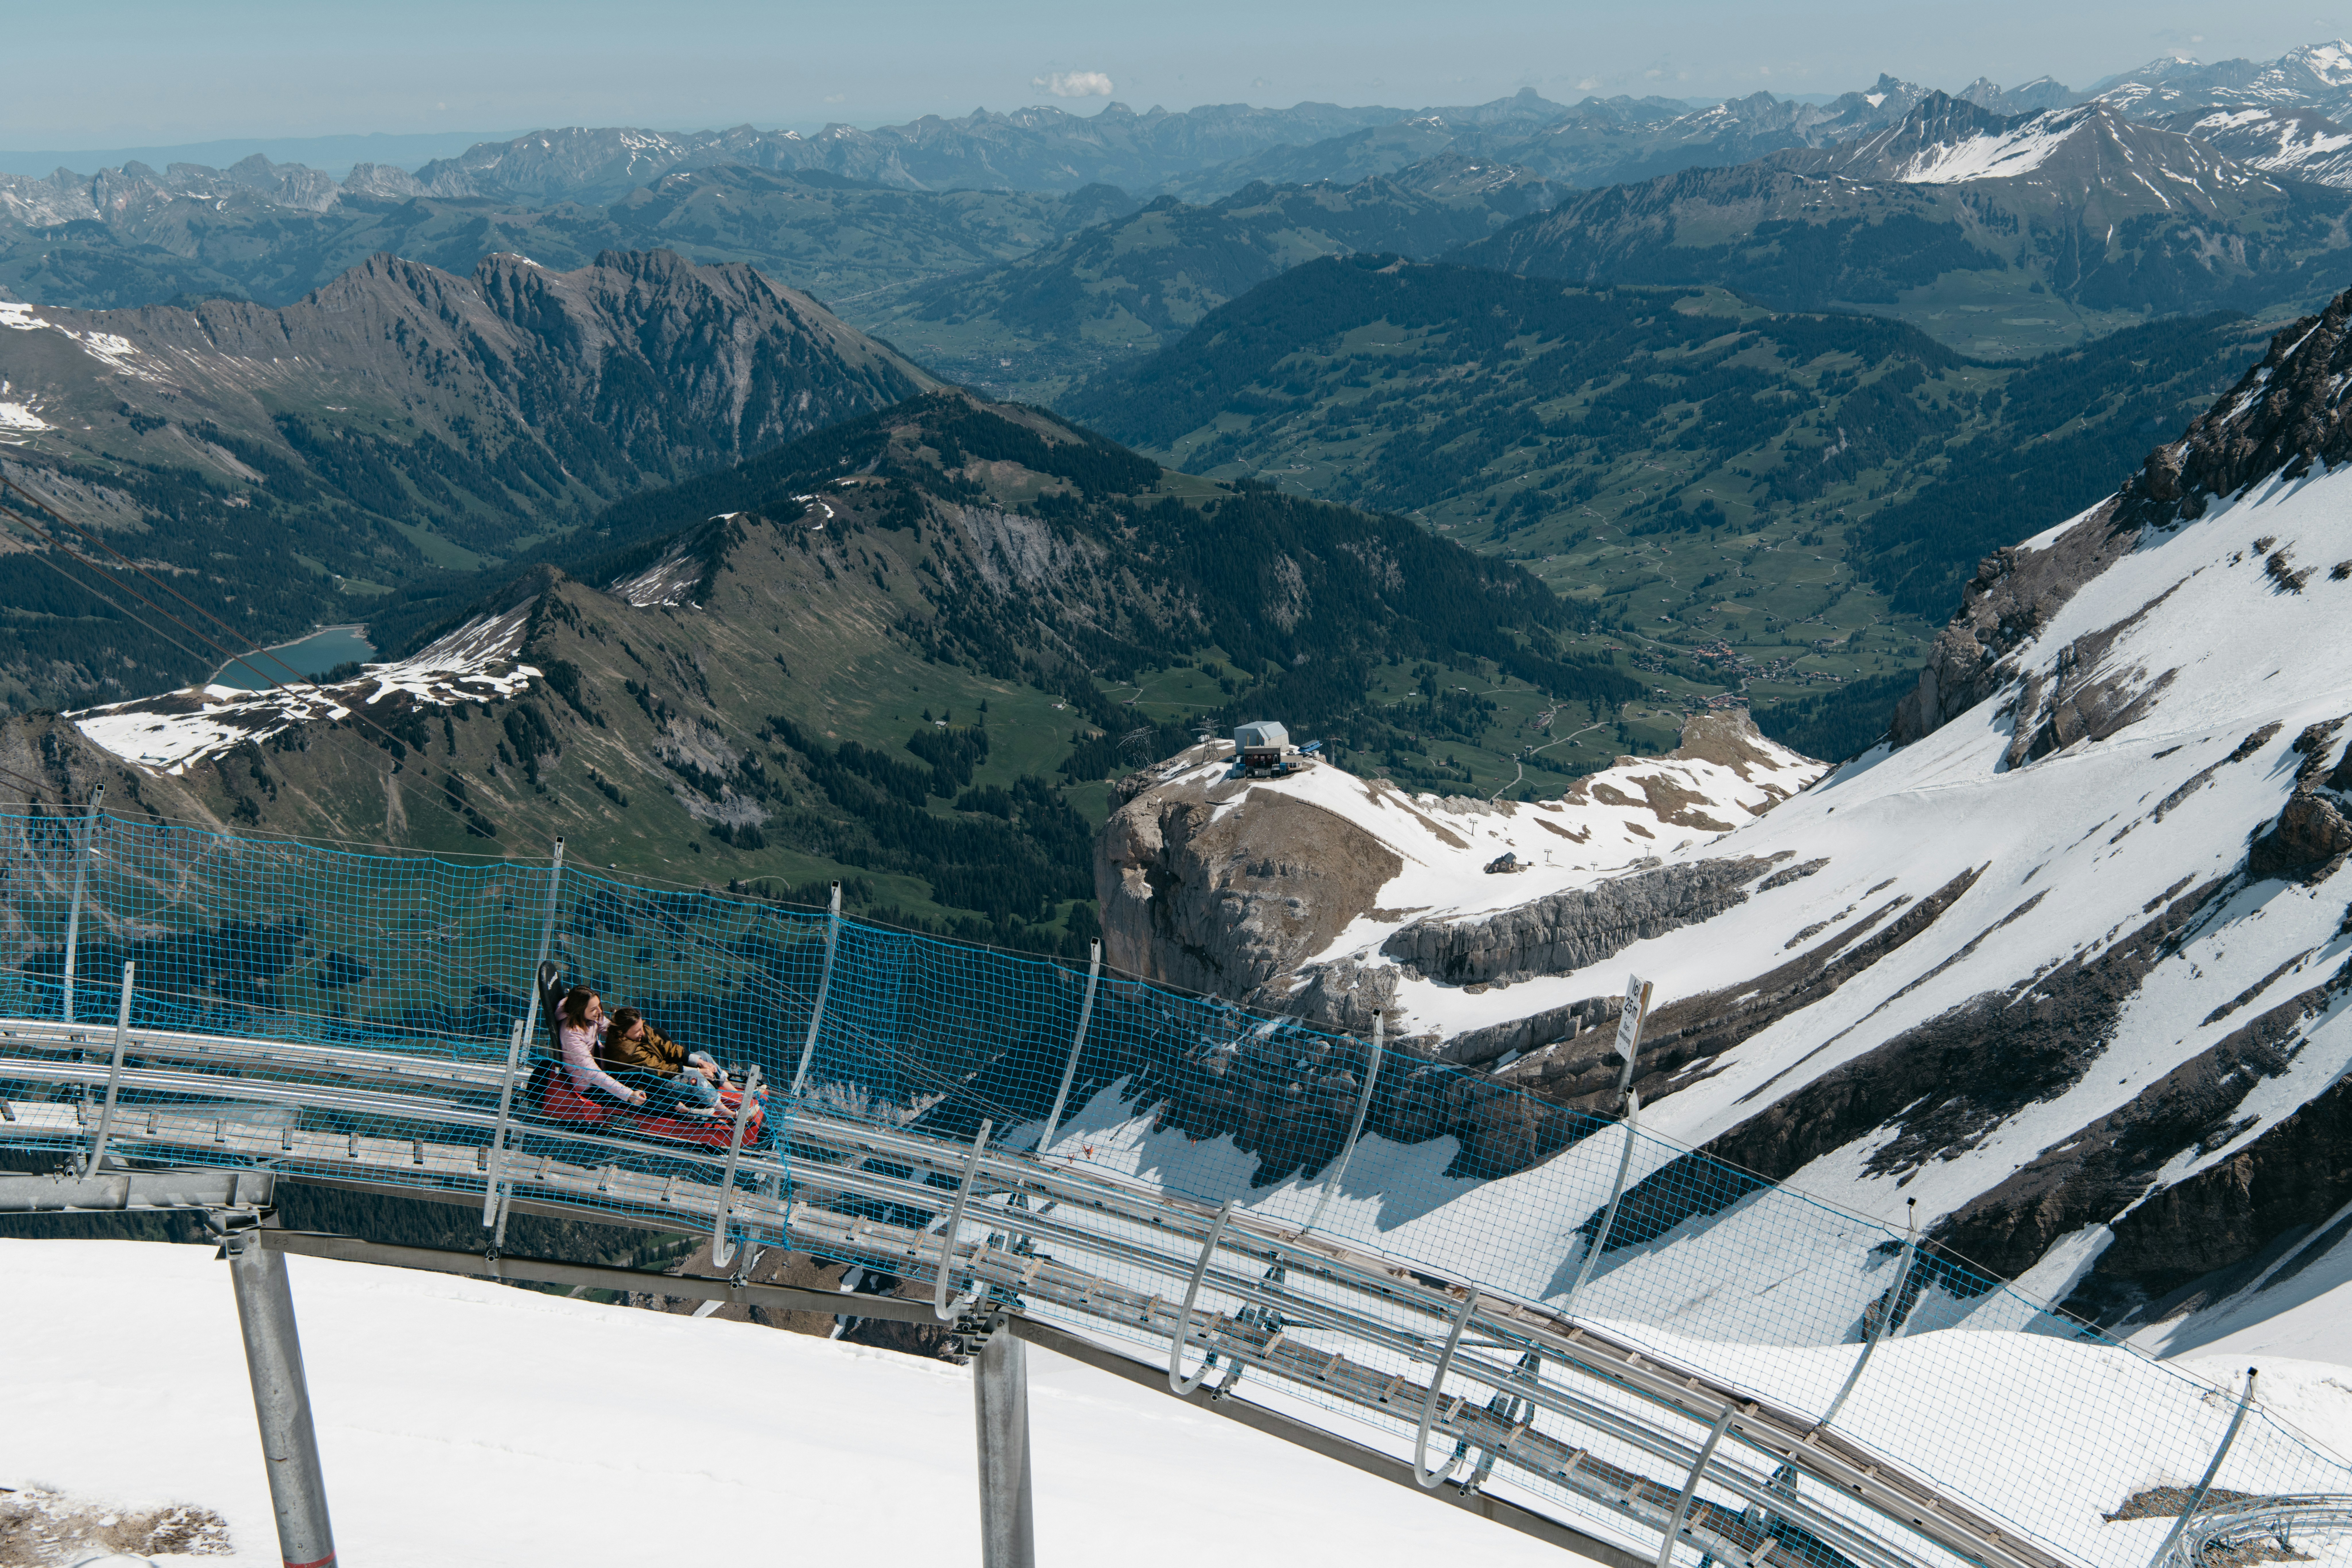 Luftseilbahn Retourticket inkl. Alpine Coaster